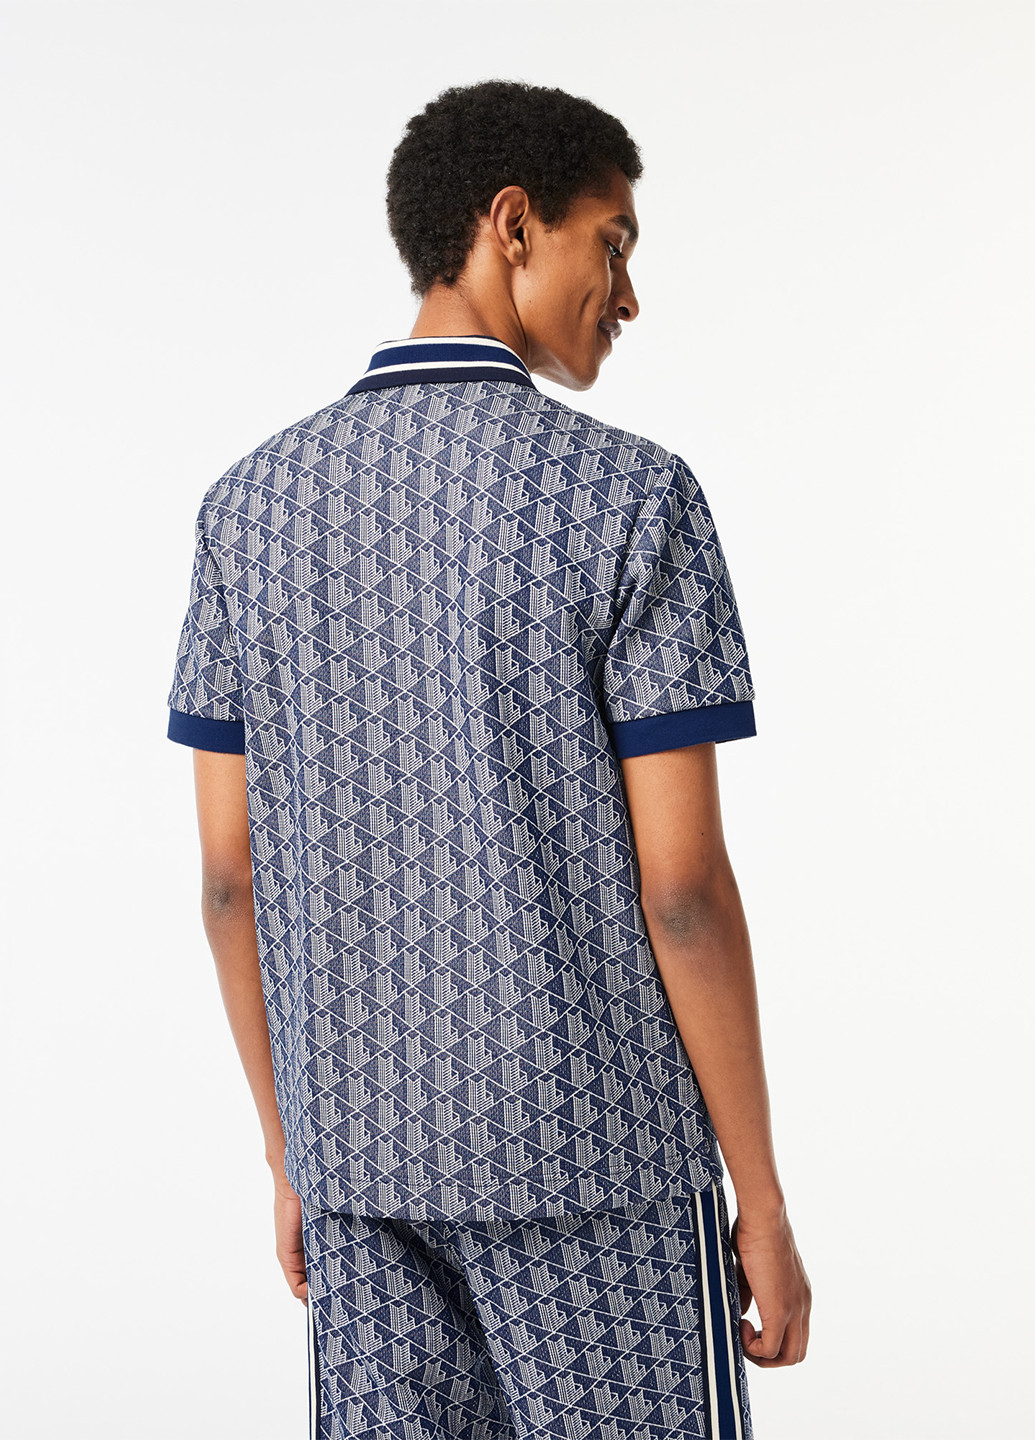 Серо-синяя футболка-поло для мужчин Lacoste с геометрическим узором